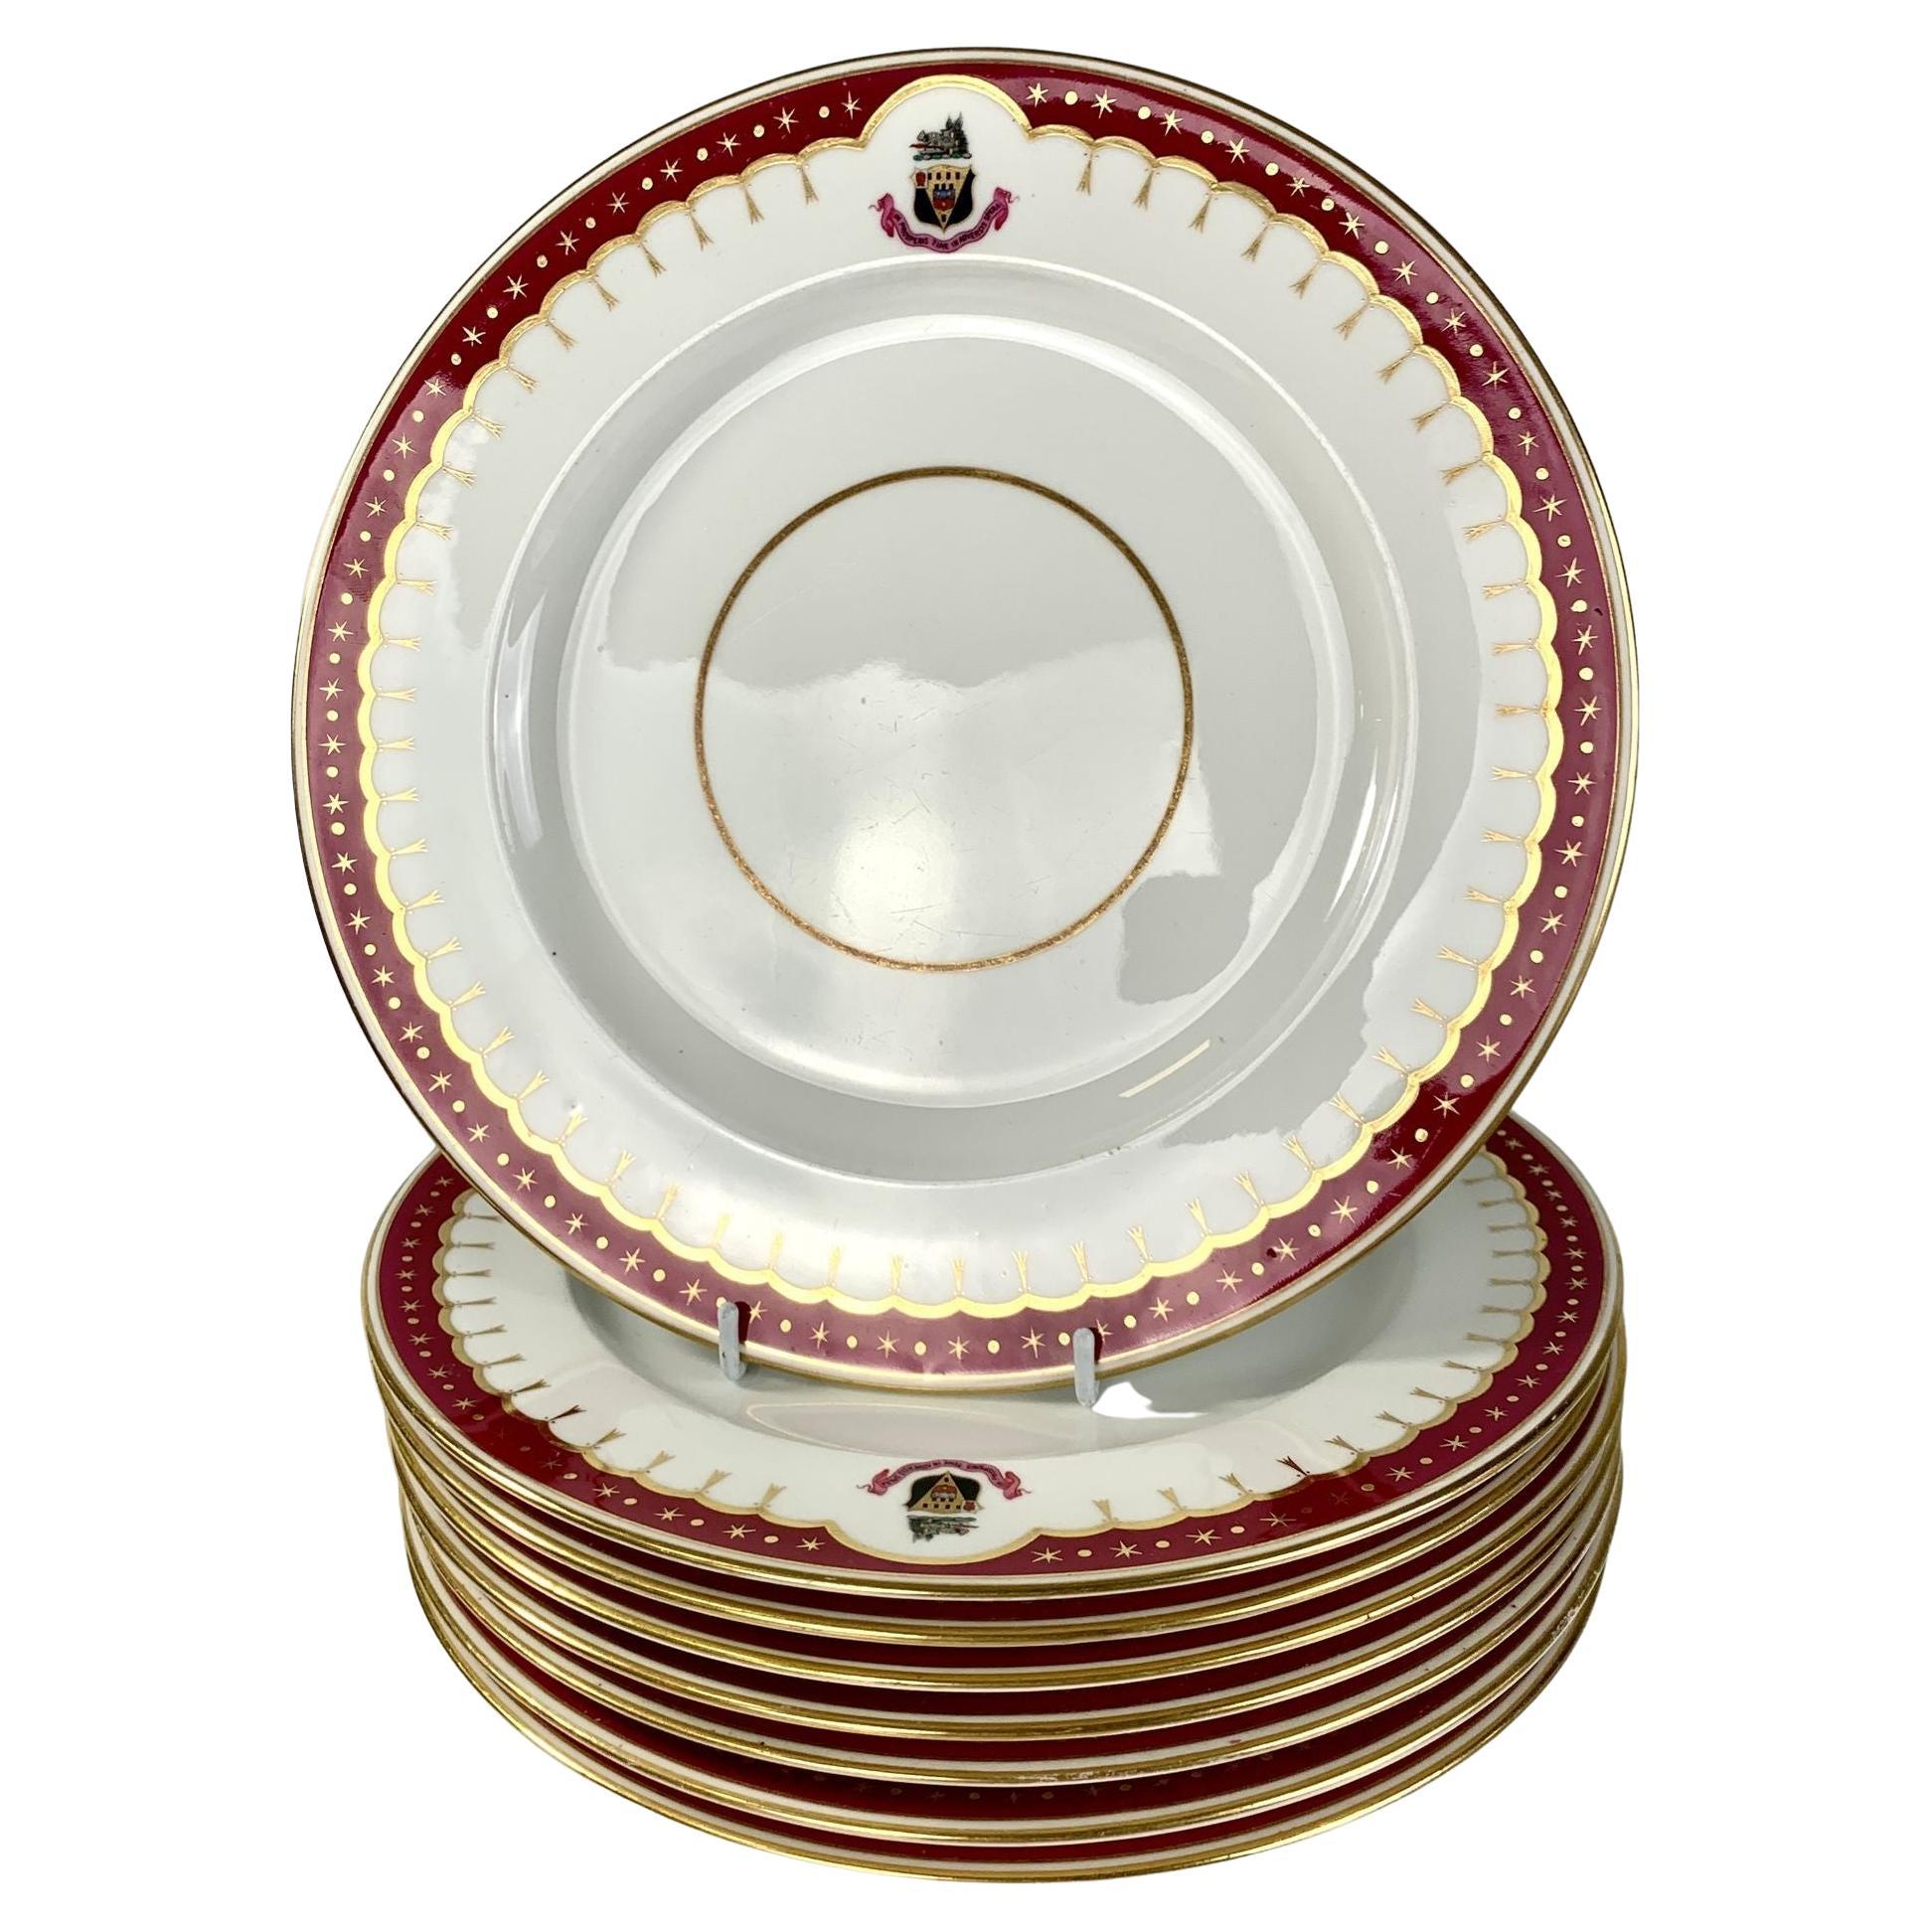 Set 16 Antique Porcelain Armorial Dinner Plates Burgundy Borders England 1870